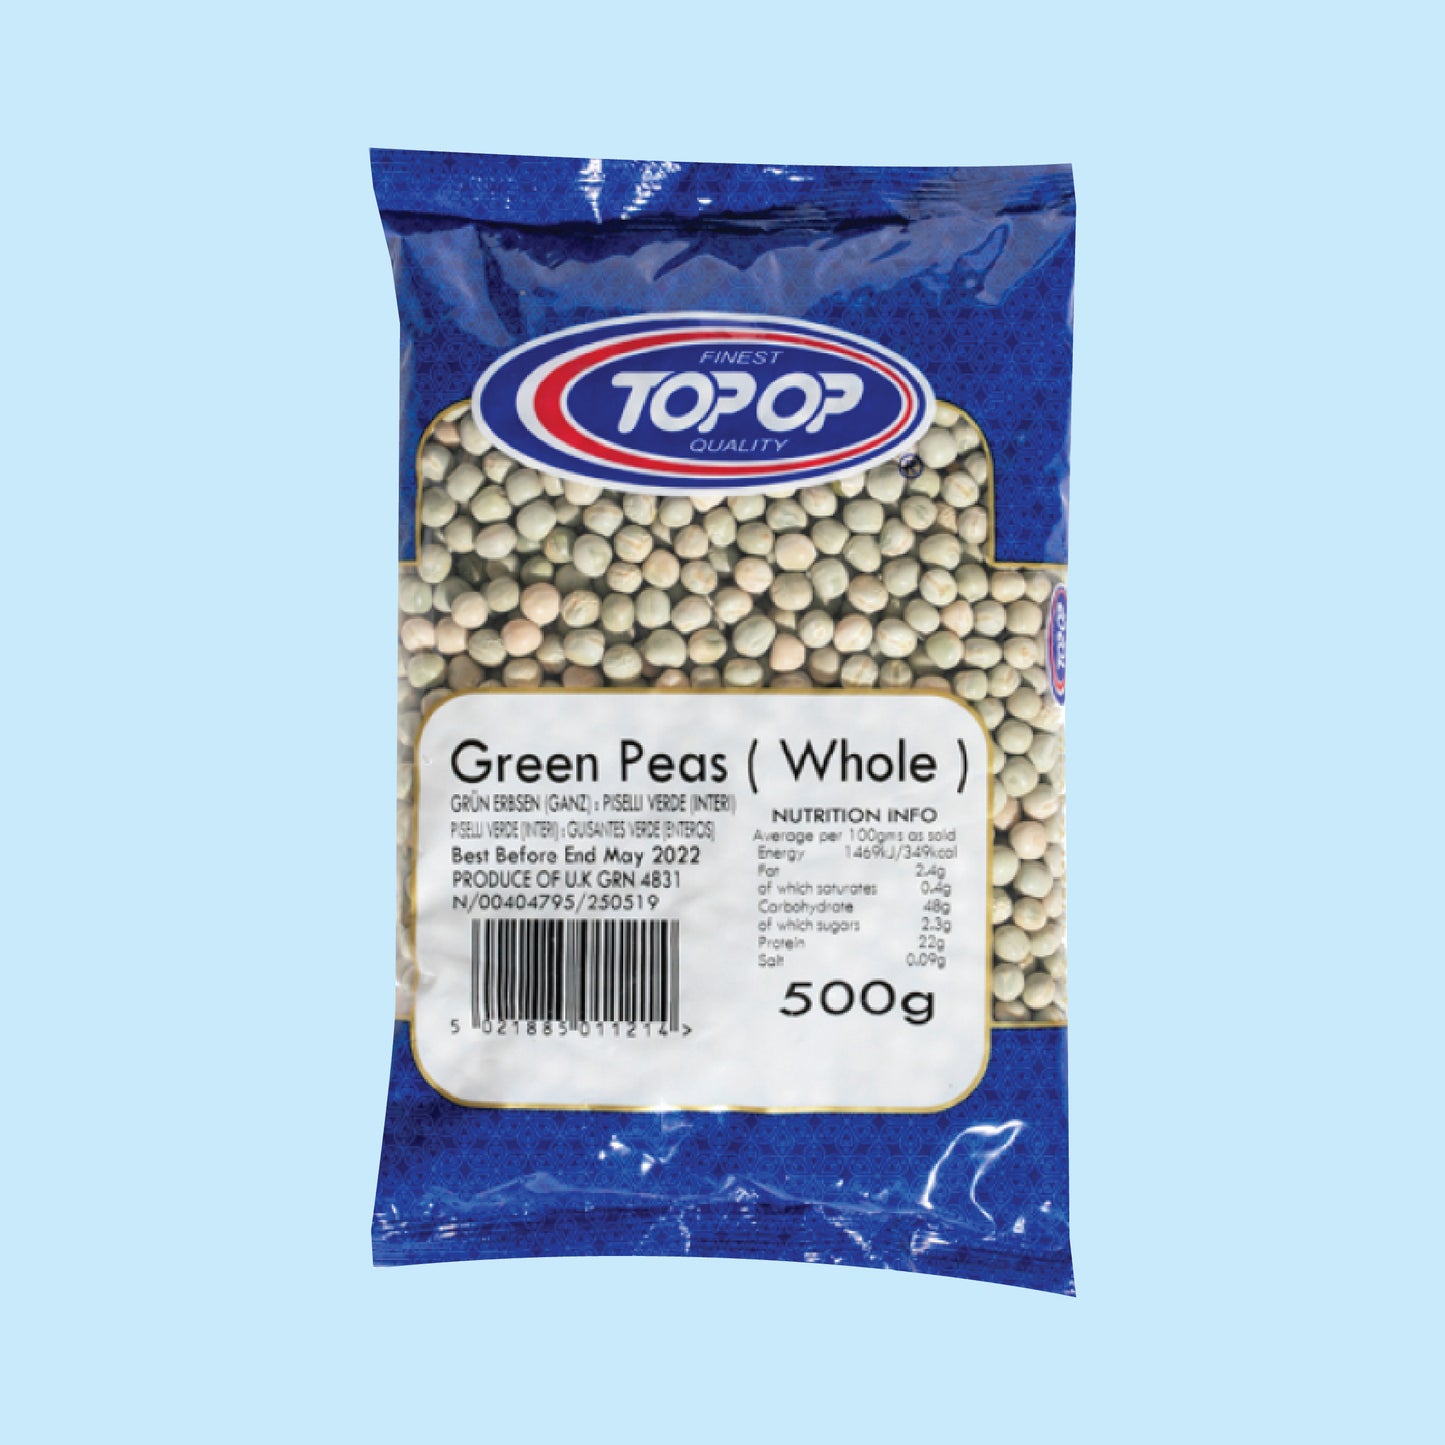 Top op Green peas (whole)